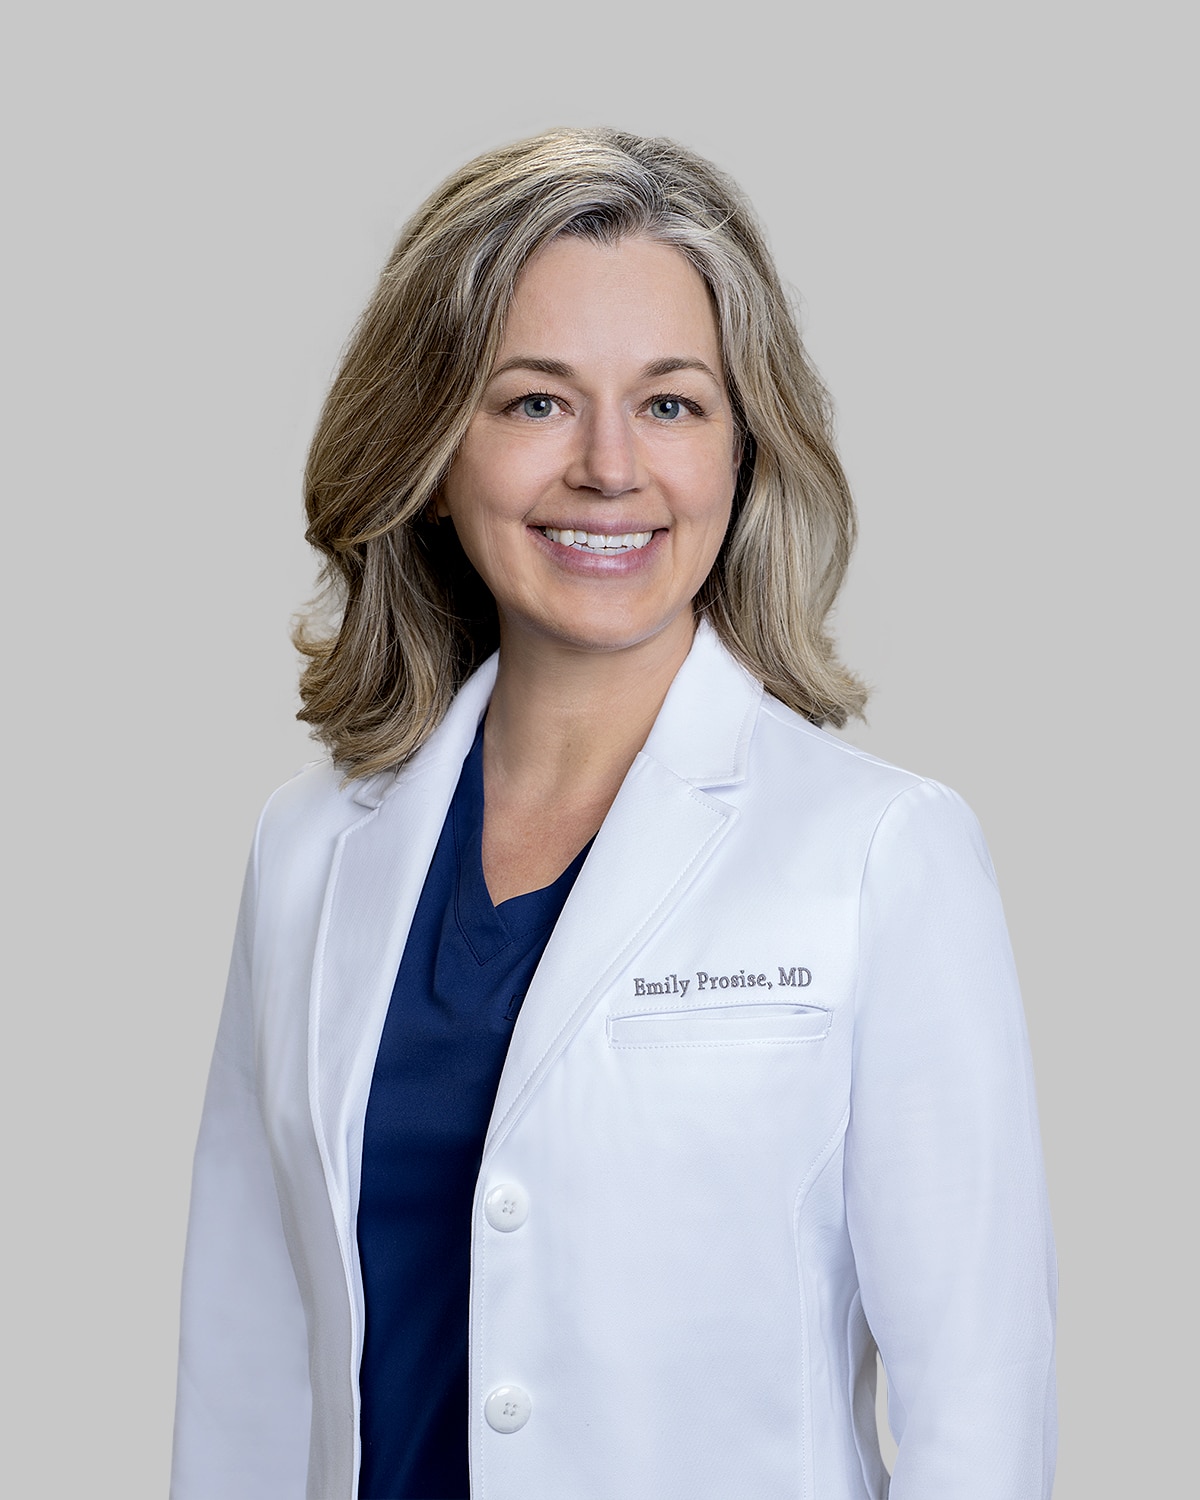 Dr. Emily L. Prosise MD